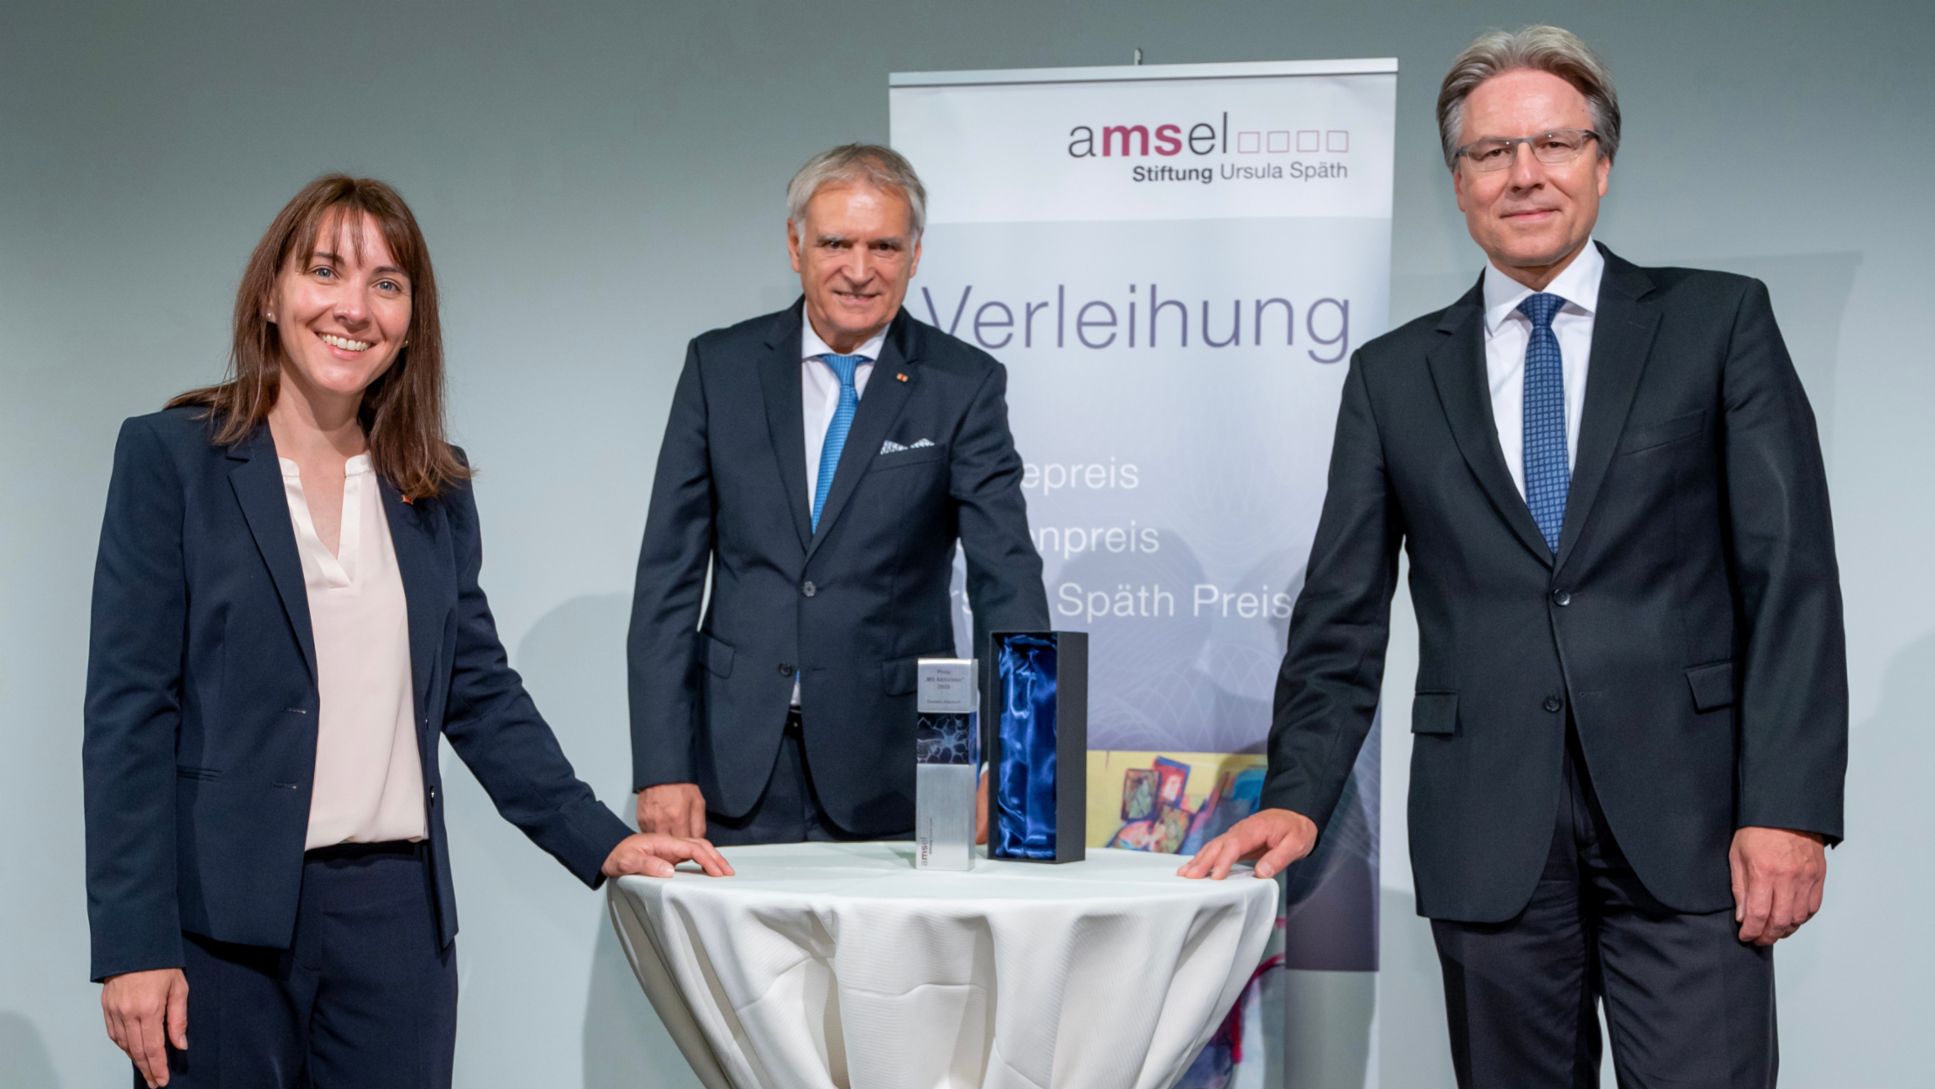 Preisverleihung der AMSEL Stiftung Ursula Späth, Daniela Adomeit, Adam Michel, Andreas Haffner, 2021, Porsche AG